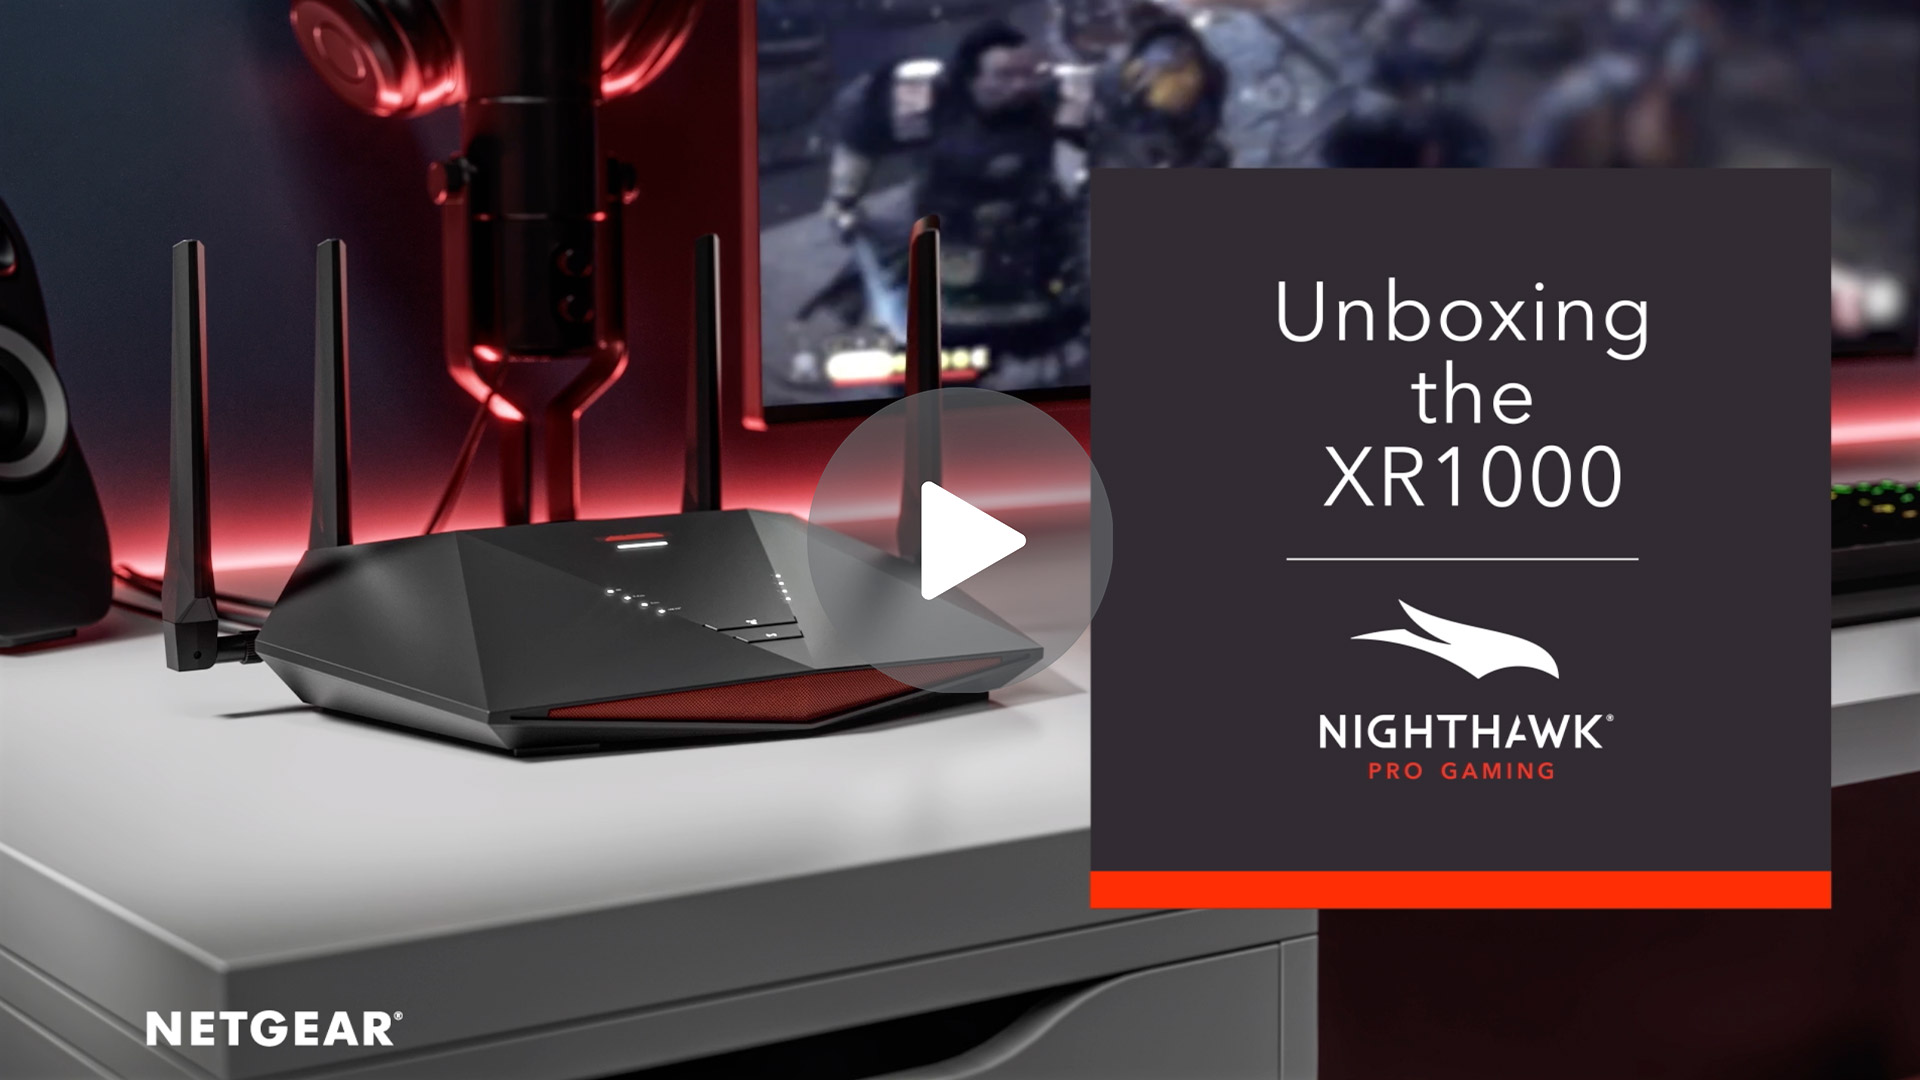 Unboxing the NETGEAR Nighthawk Pro Gaming XR1000